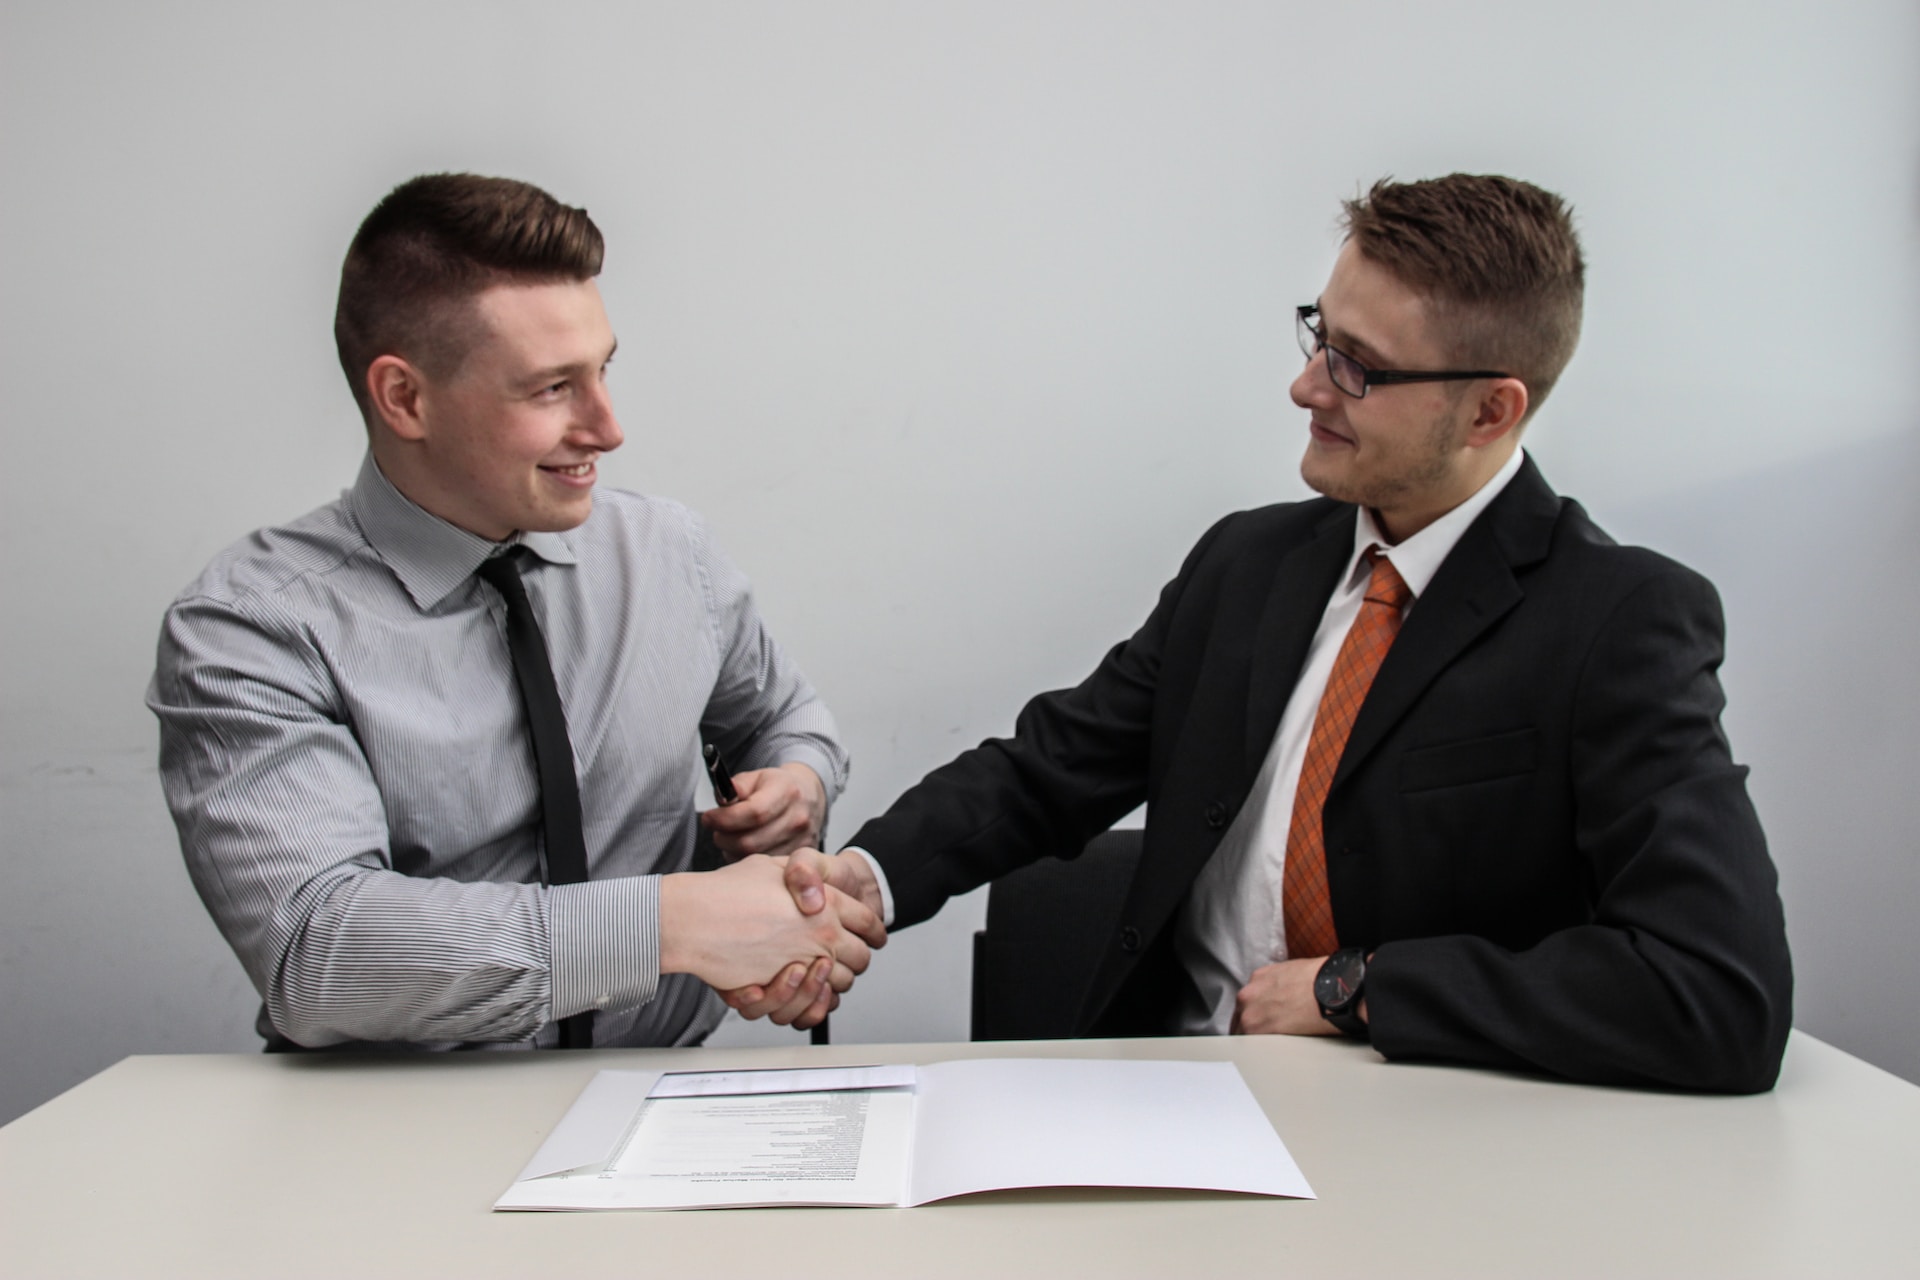 Two men shaking hands to agree on a job offer.Photo by Sebastian Herrmann on Unsplash